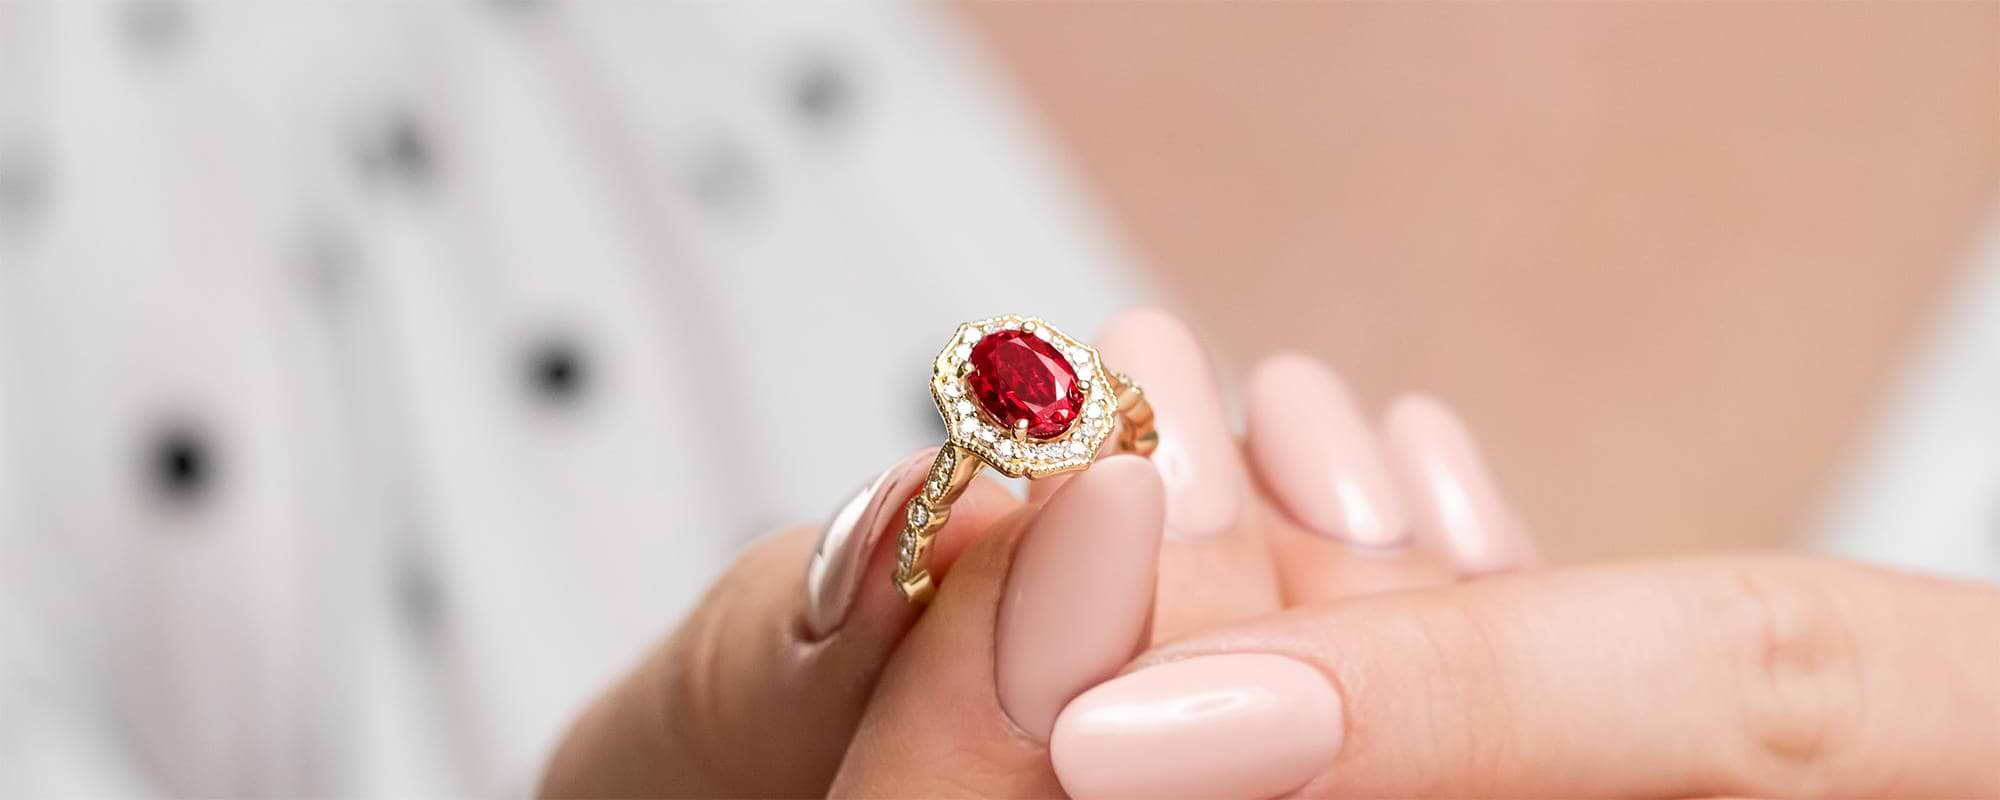 Rubies: A Precious Gemstone of Elegance and Passion